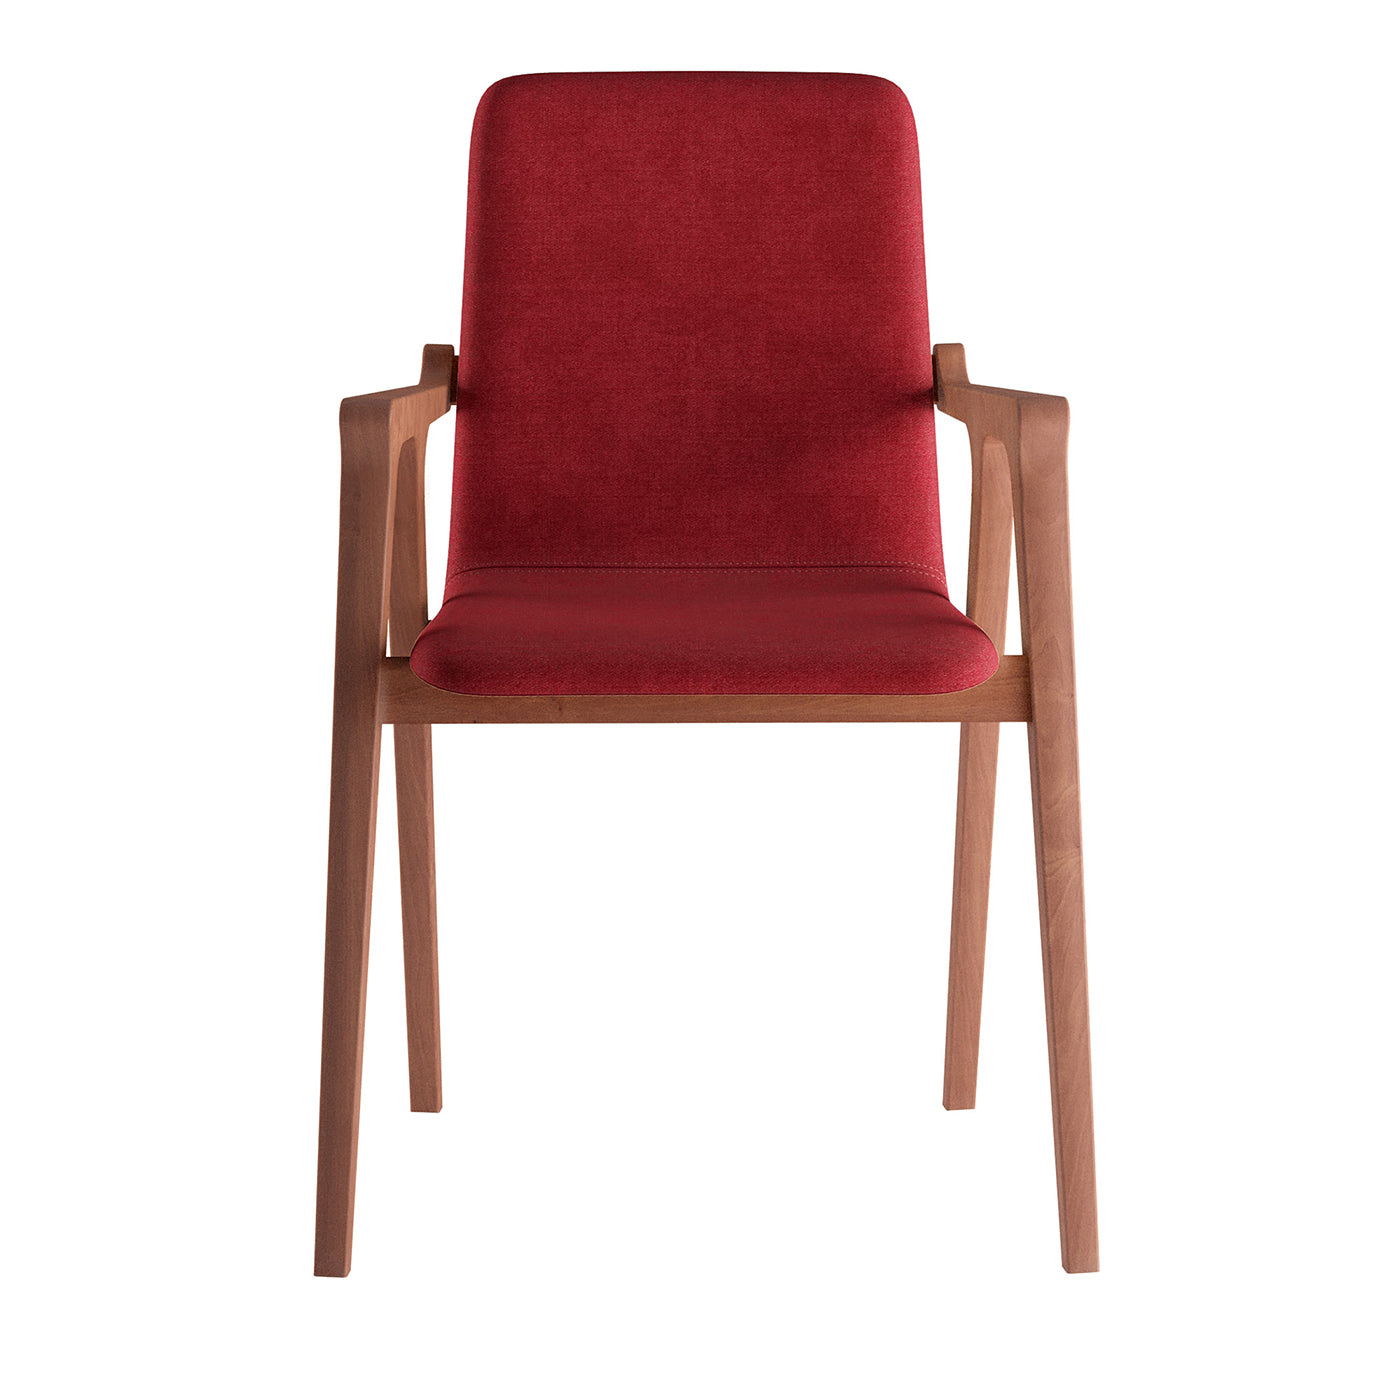 Axa Red Chair - Main view